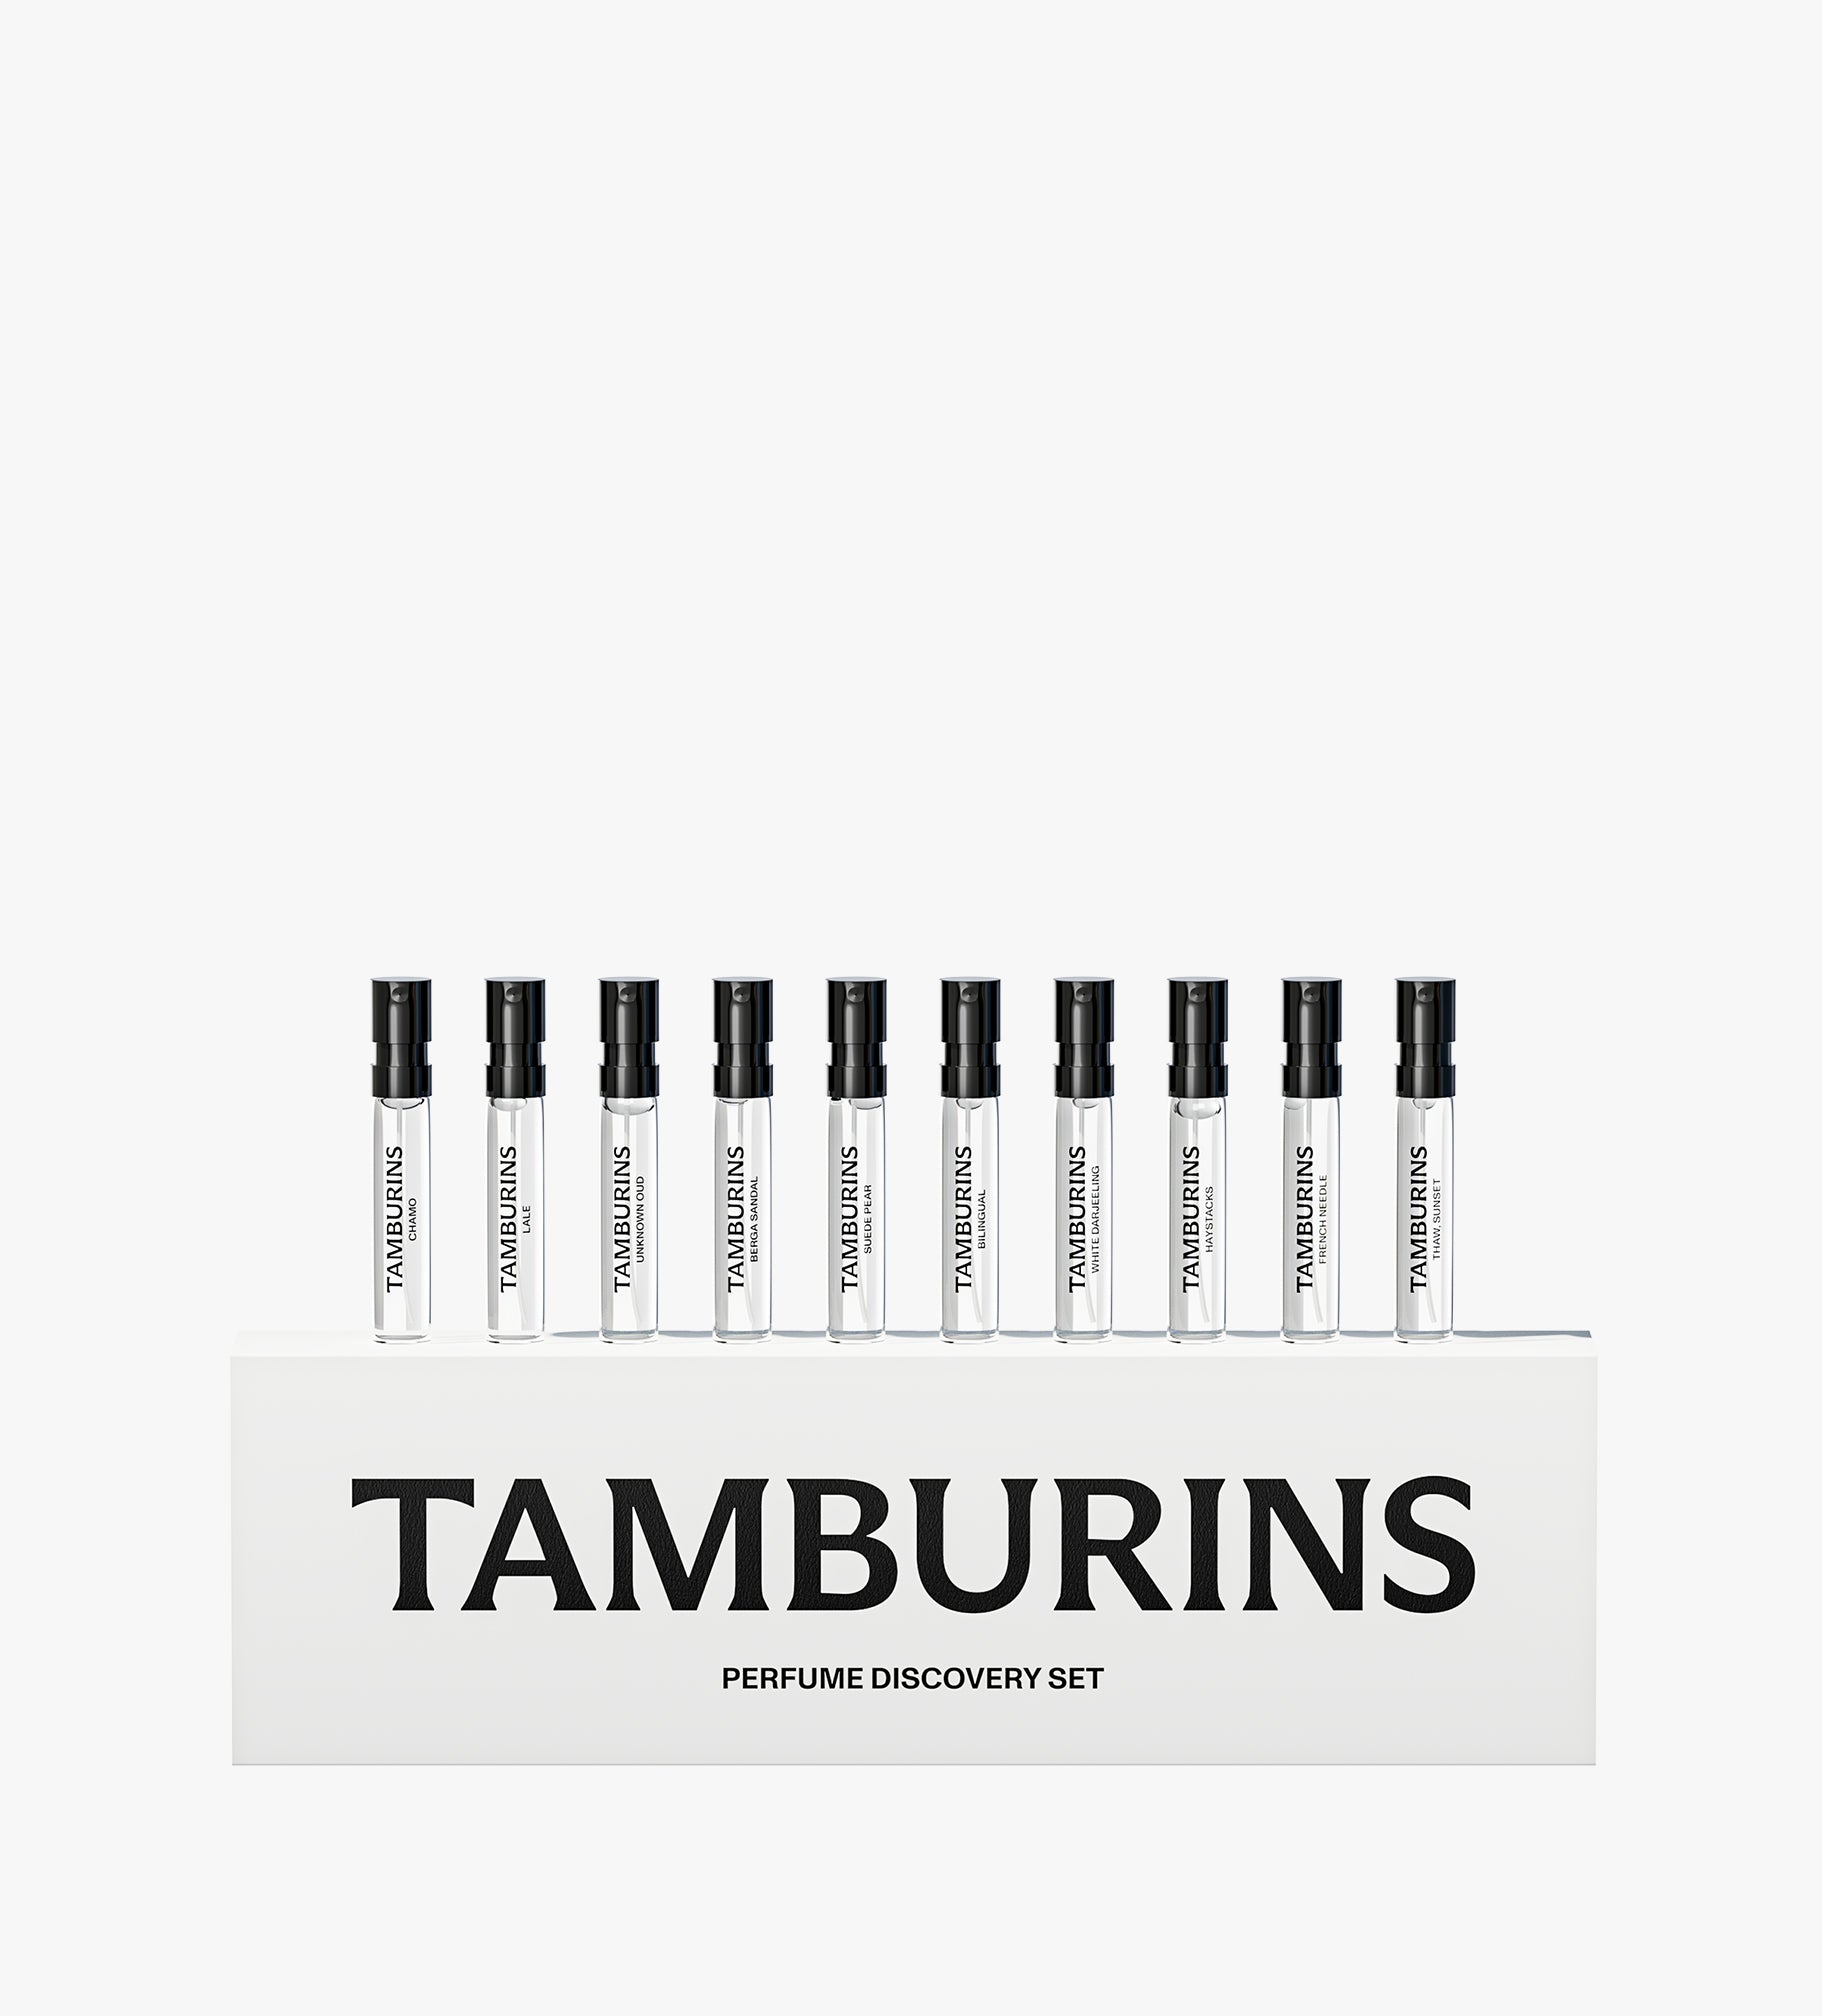 Tamburins Perfume Discovery Set